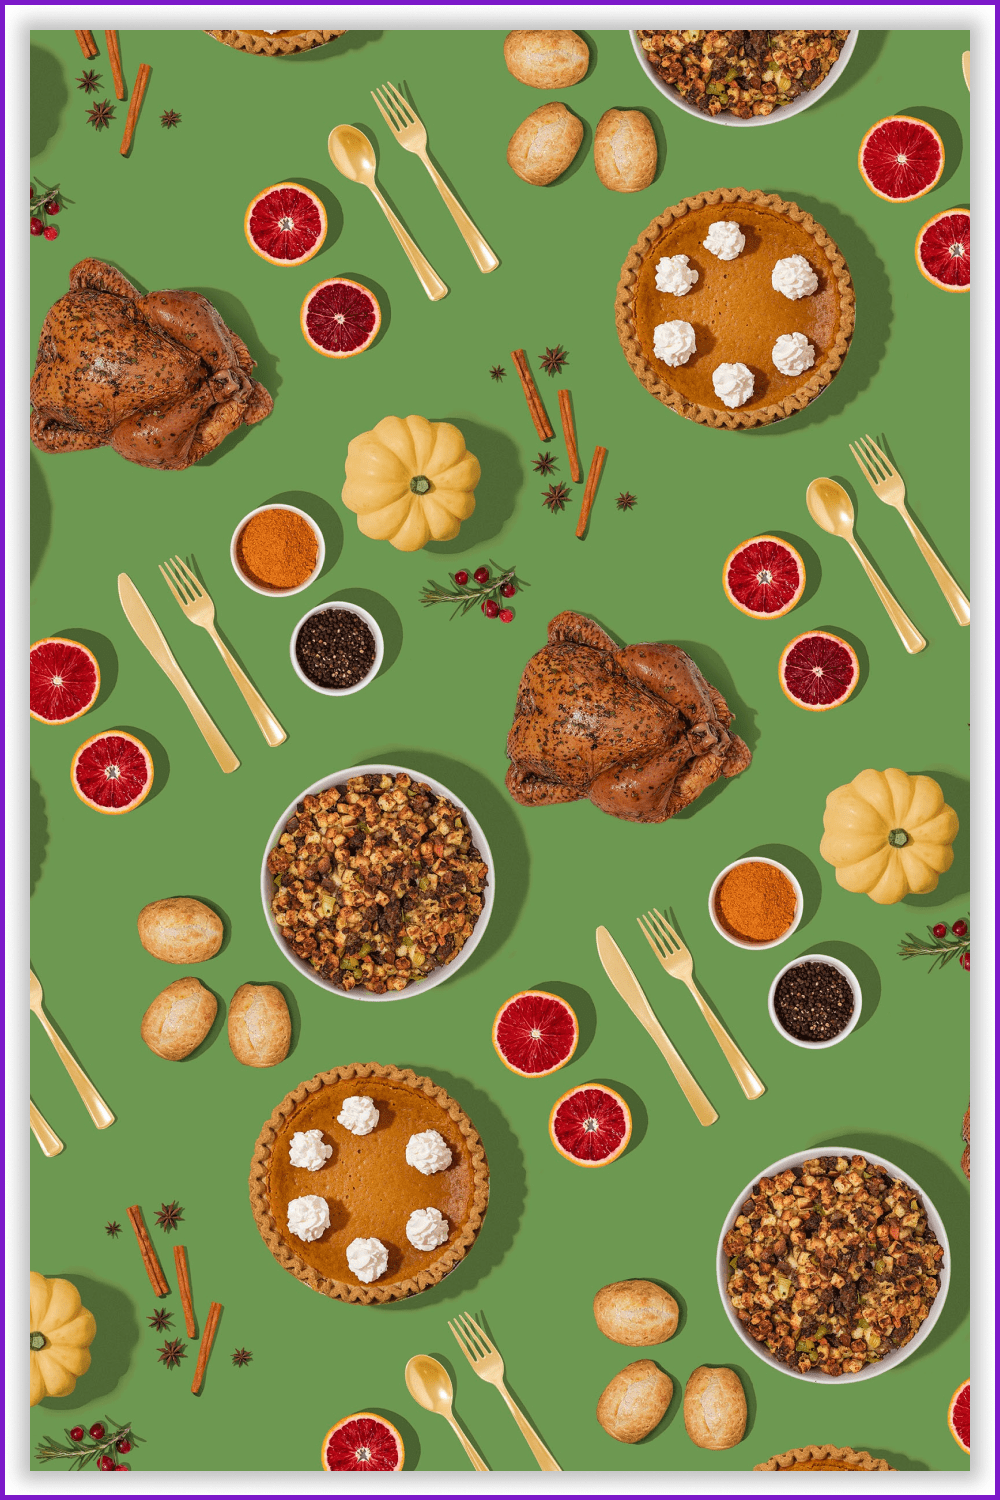 Pumpkin pie, porridge, cakes, cutlery, turkey, cinnamon sticks on a green background.